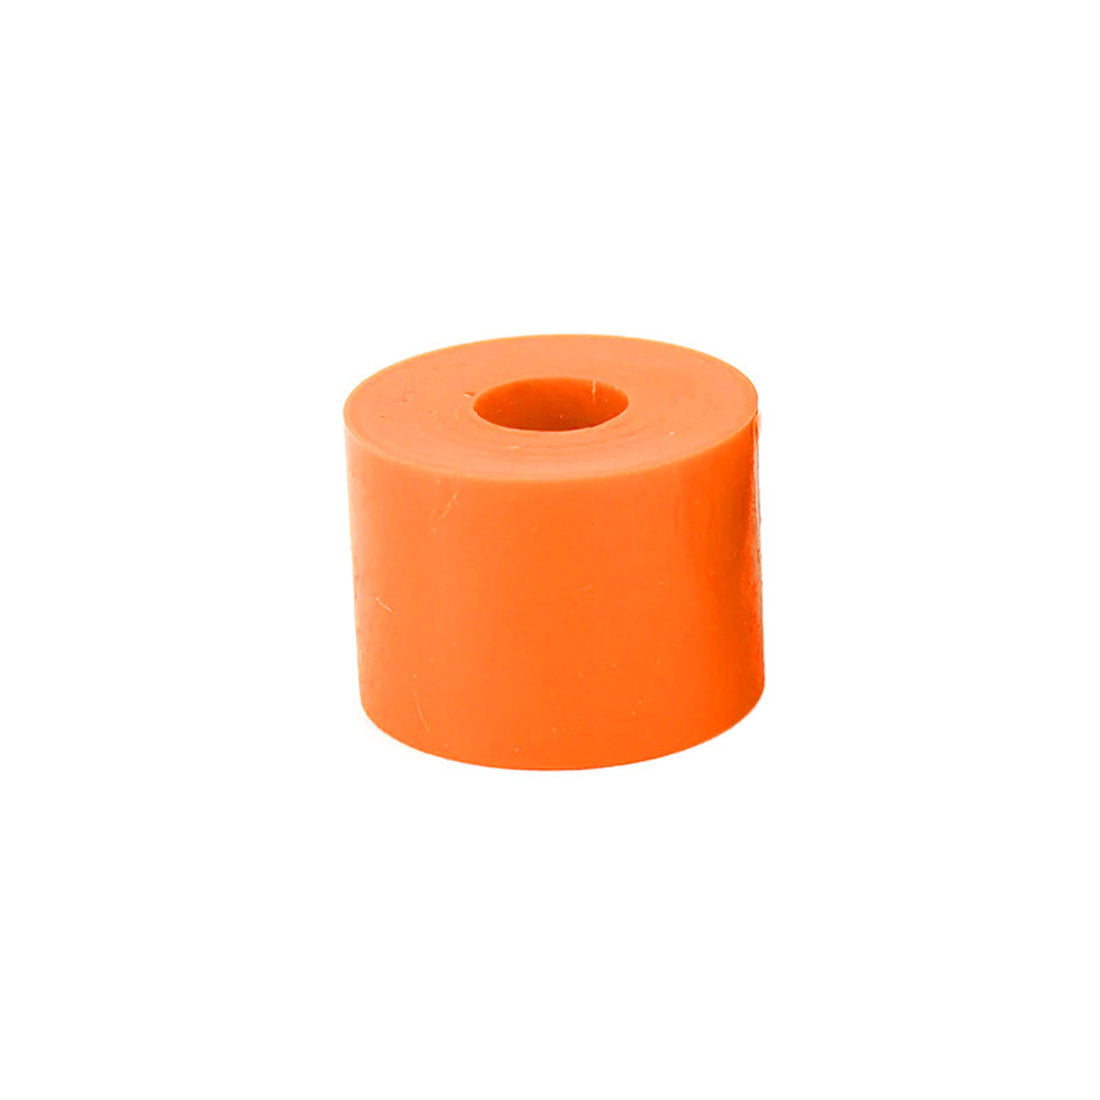 ABEC 11 Reflex Barrel Bushing - Single .750&quot; 89a - Orange Plus Skateboard Hardware and Parts